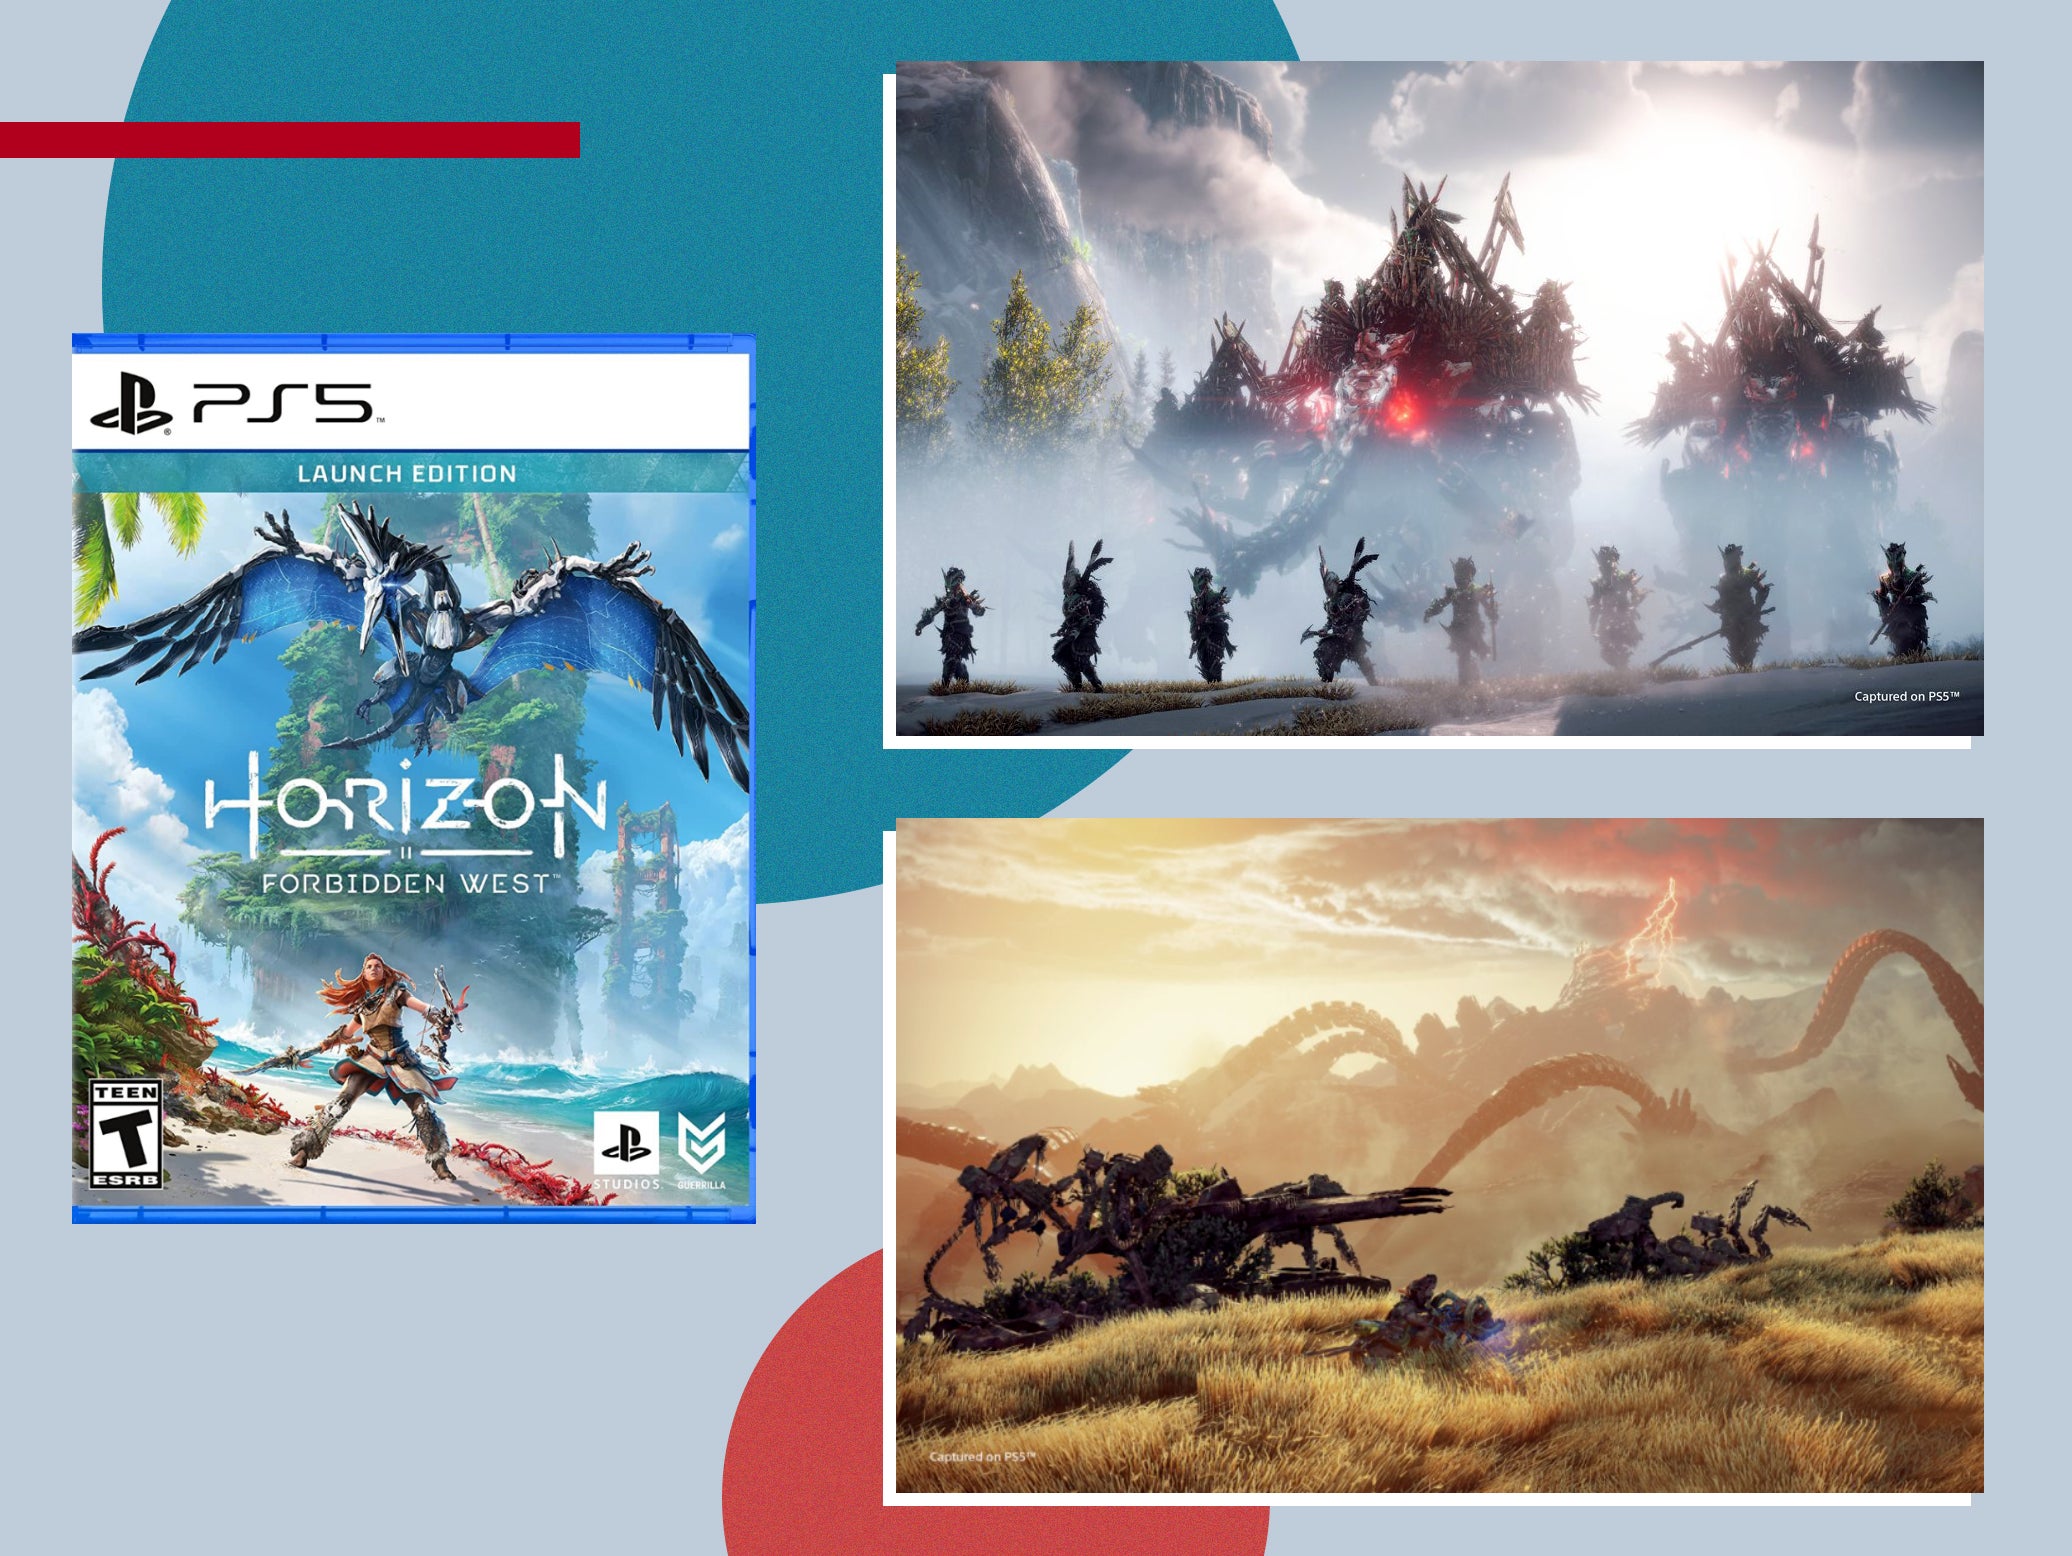 Best Buy: Horizon Forbidden West Collector's Edition PlayStation 4